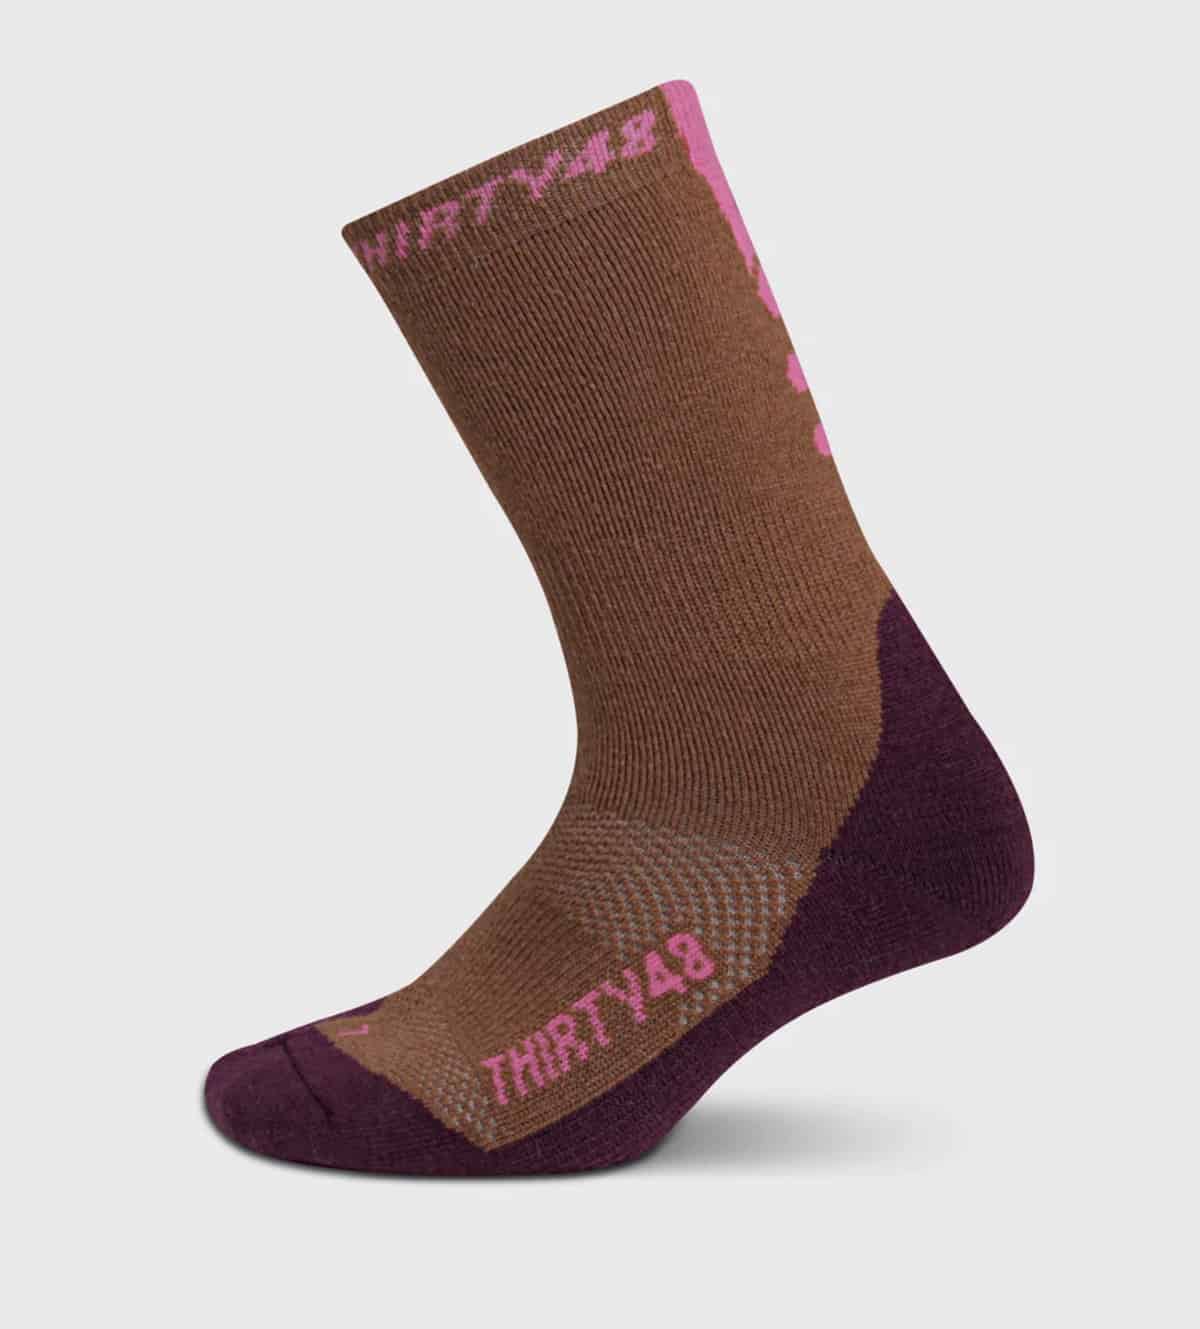 Heavy synthetic acrylic wool vegan hiking socks from Thirty 48.